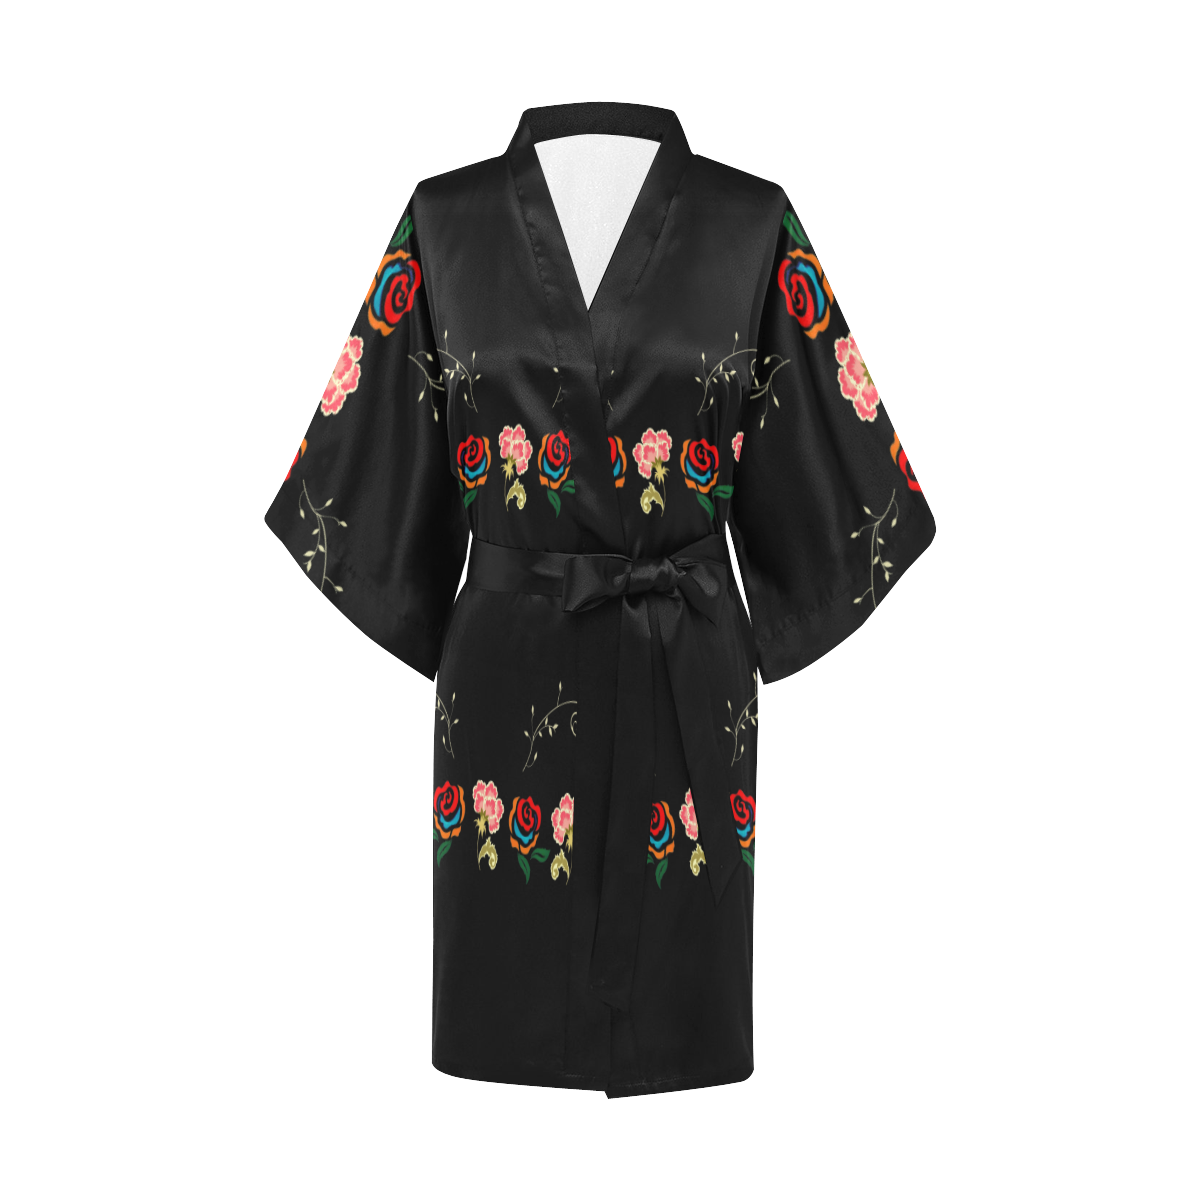 Armenian tricolor Roses Kimono Robe